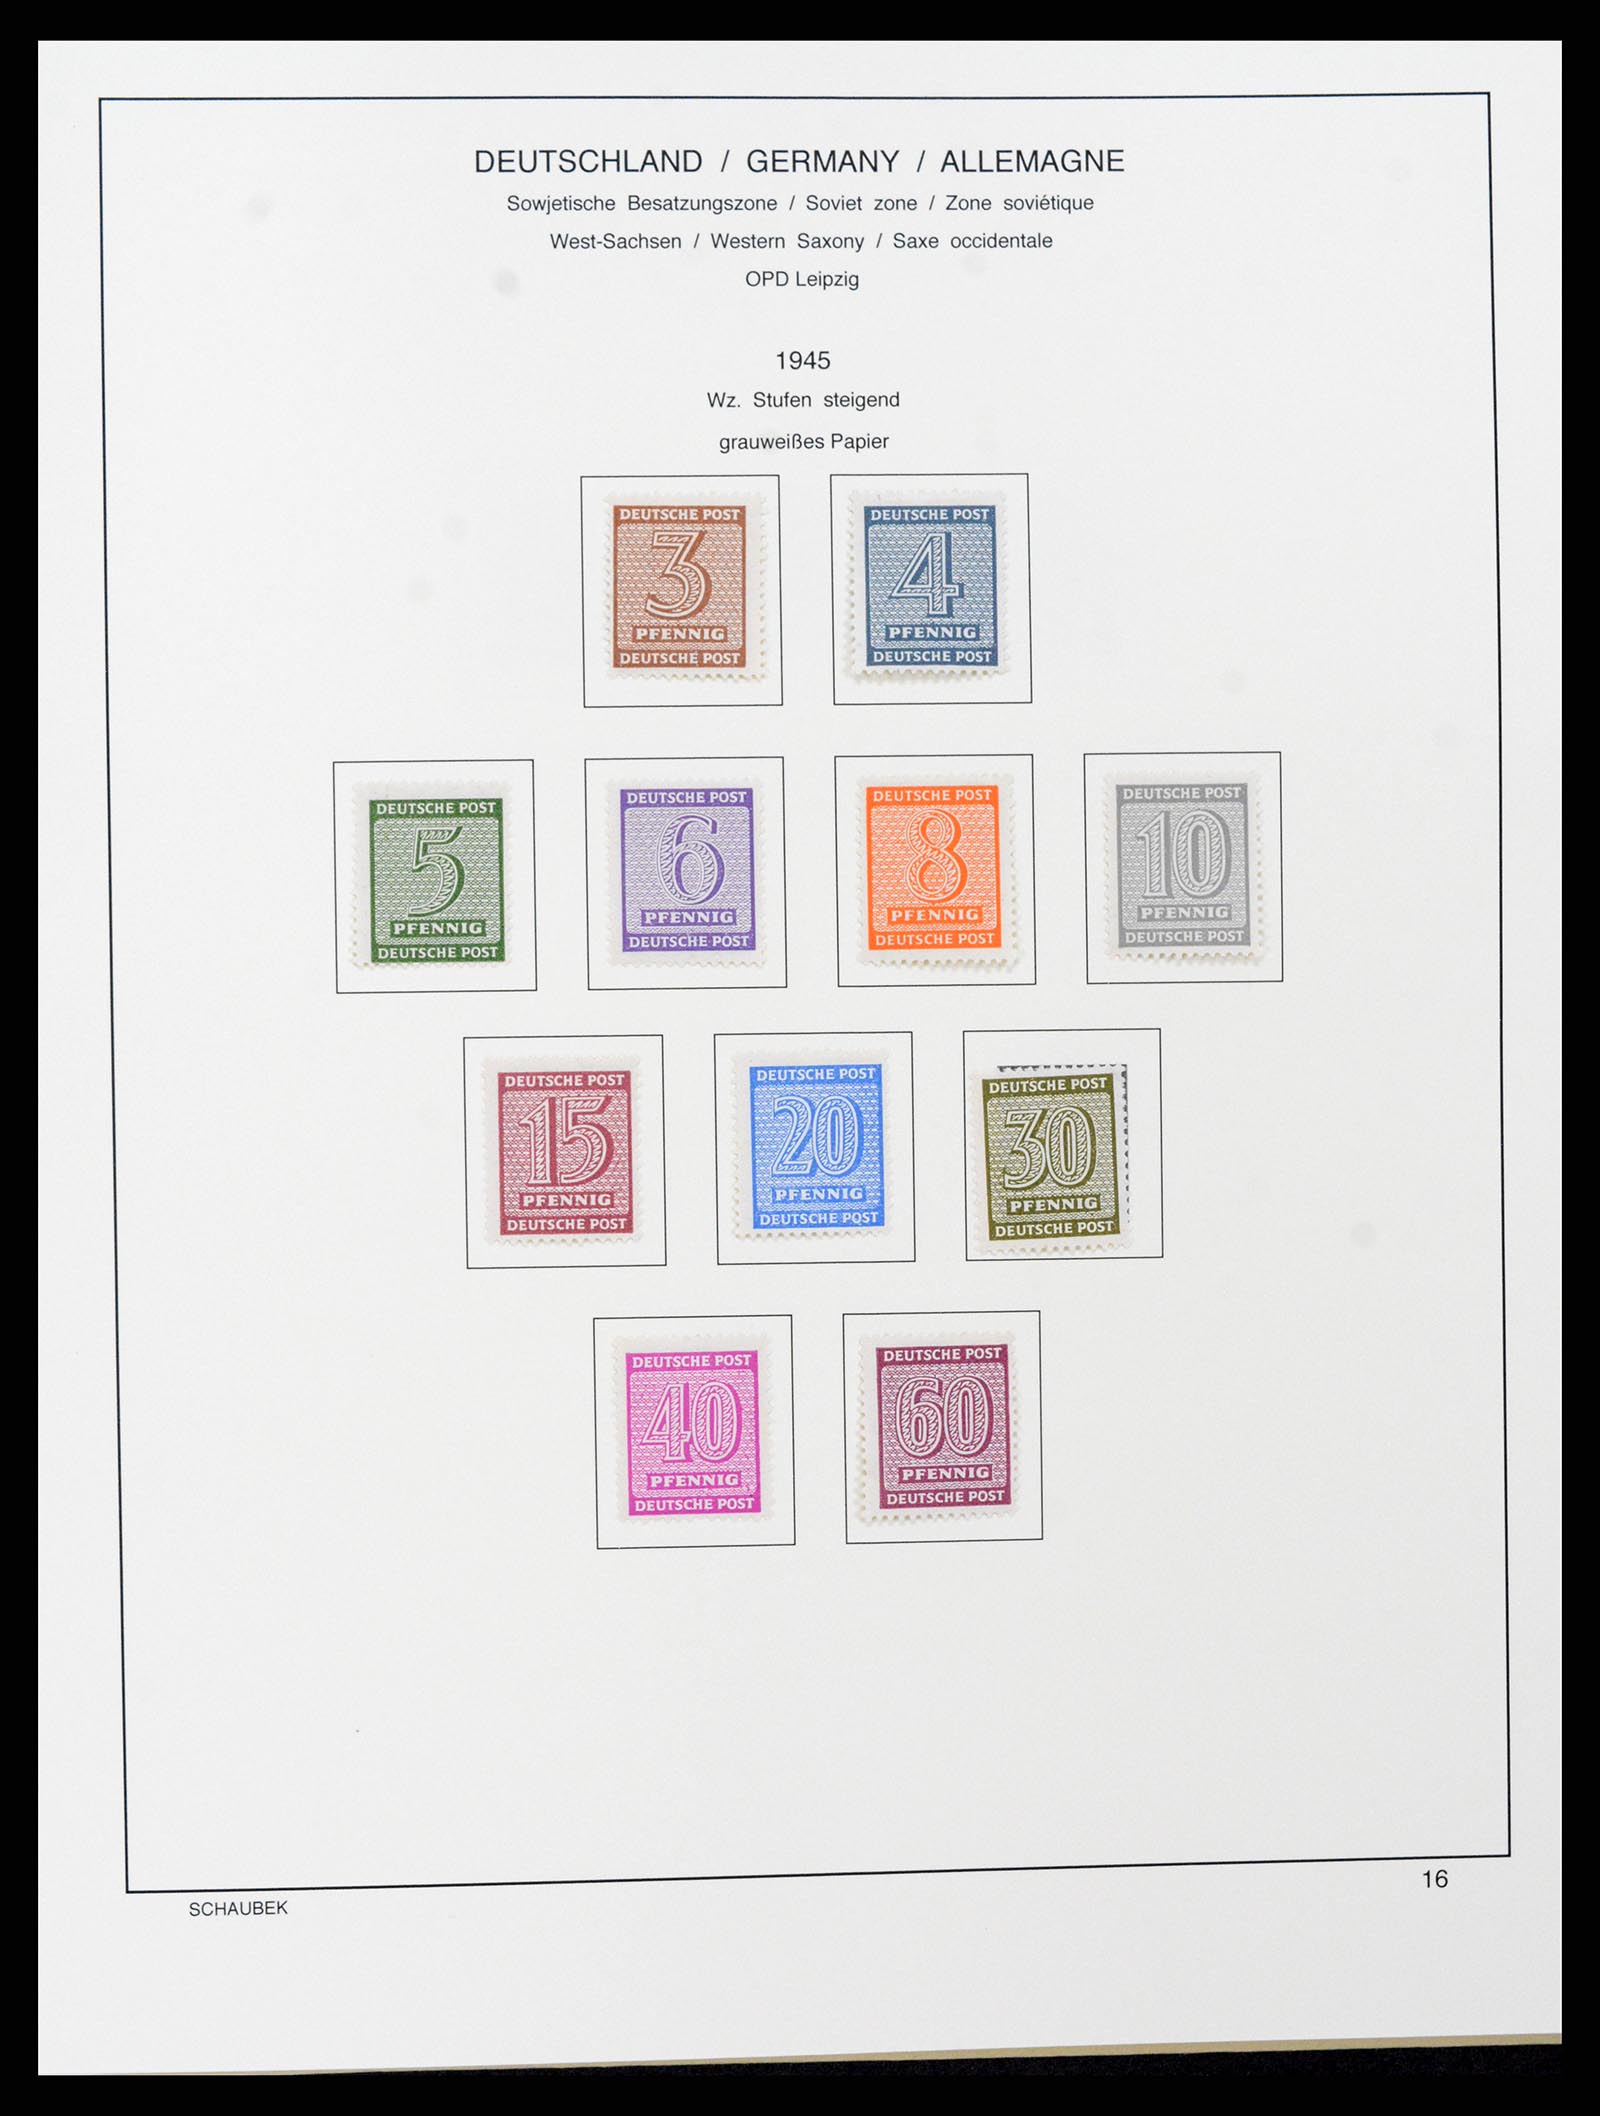 37645 040 - Stamp collection 37645 German Zones 1945-1949.